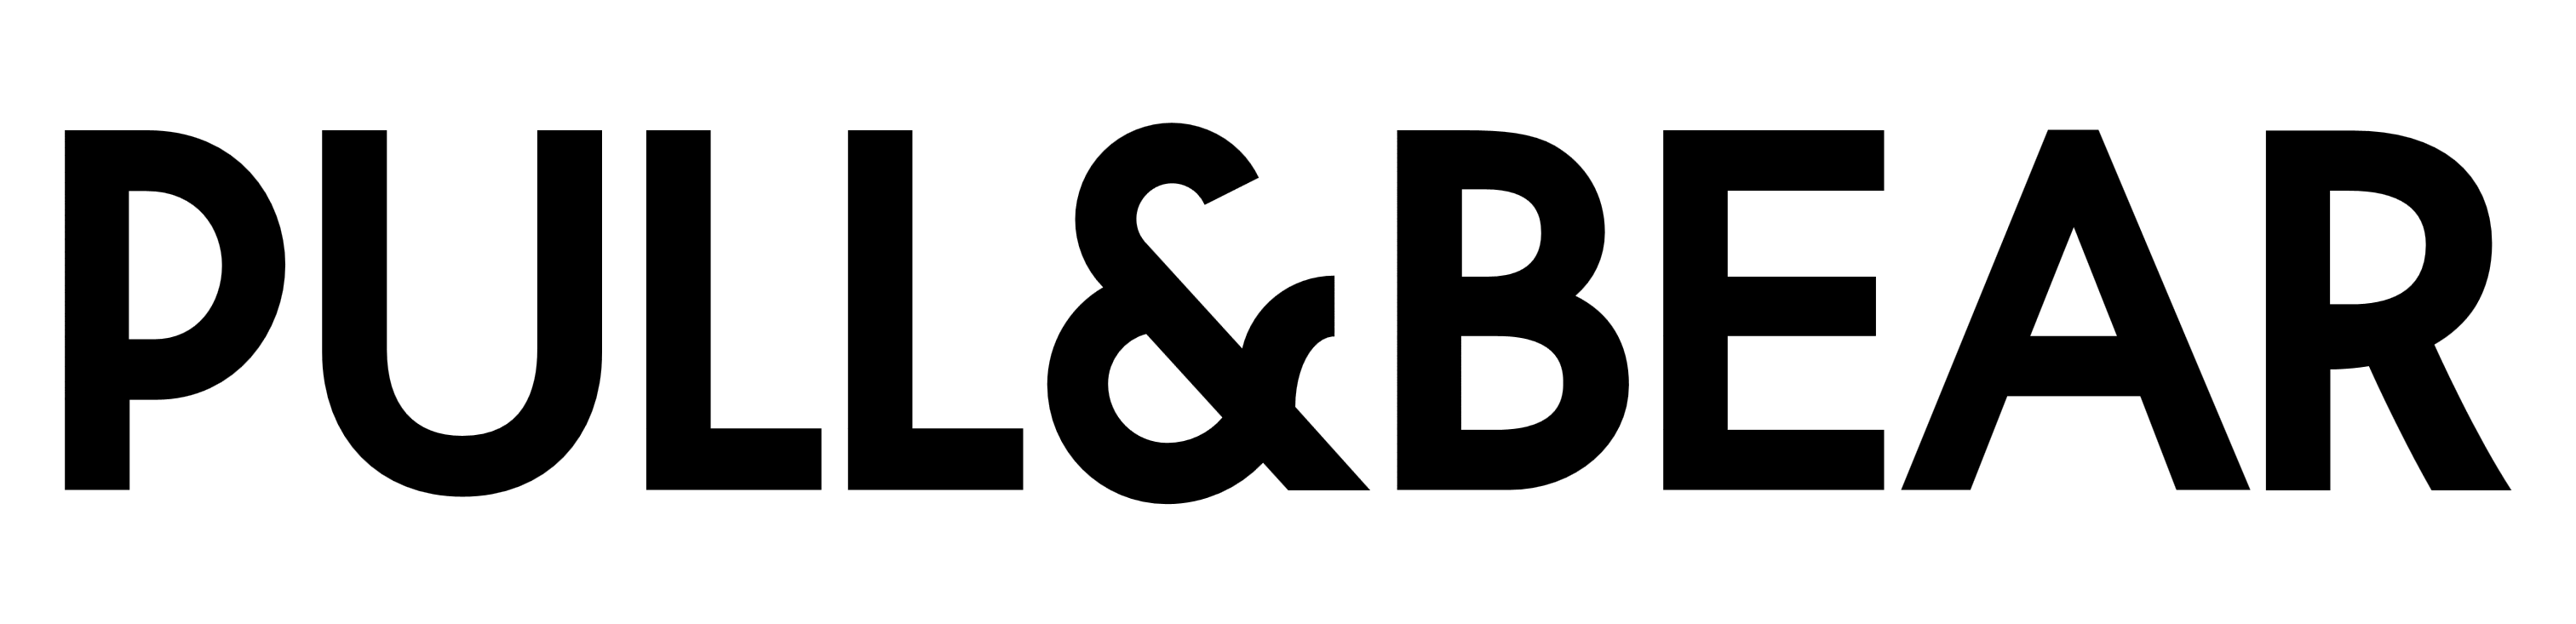 Pull & Bear logo, logotype